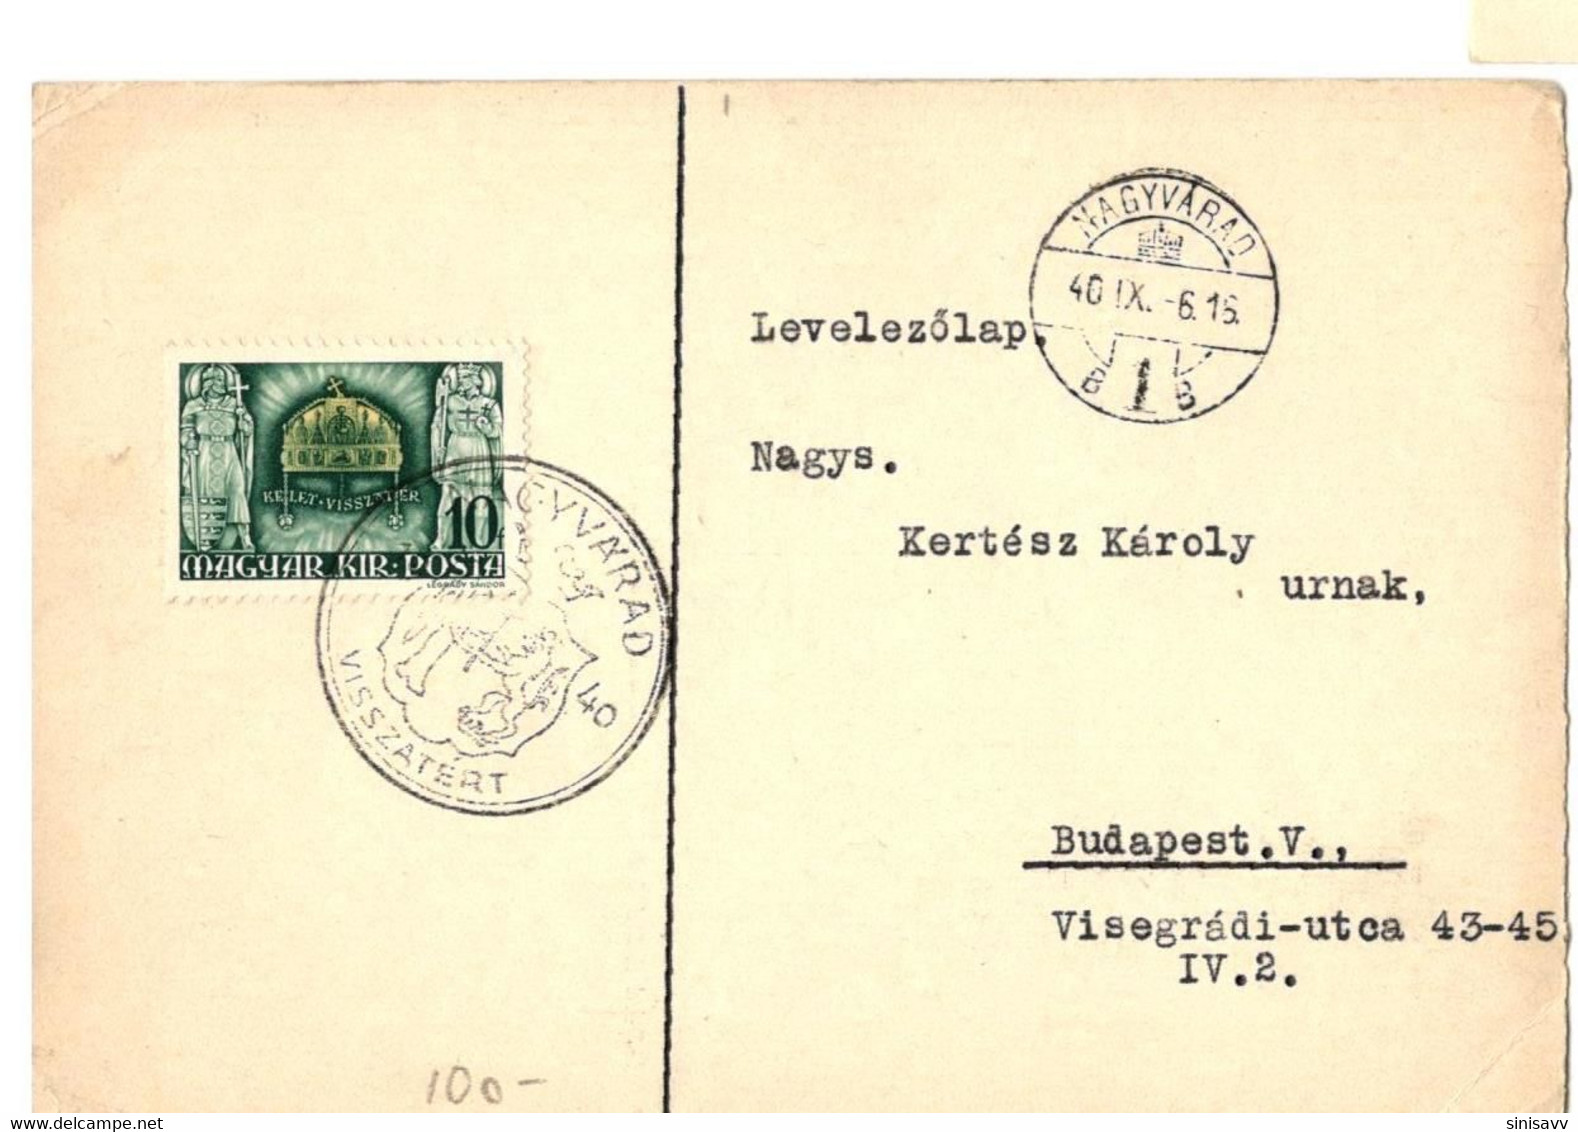 Hungary - Nagyvarad / Visszatert 1940 - Commemorative Sheets